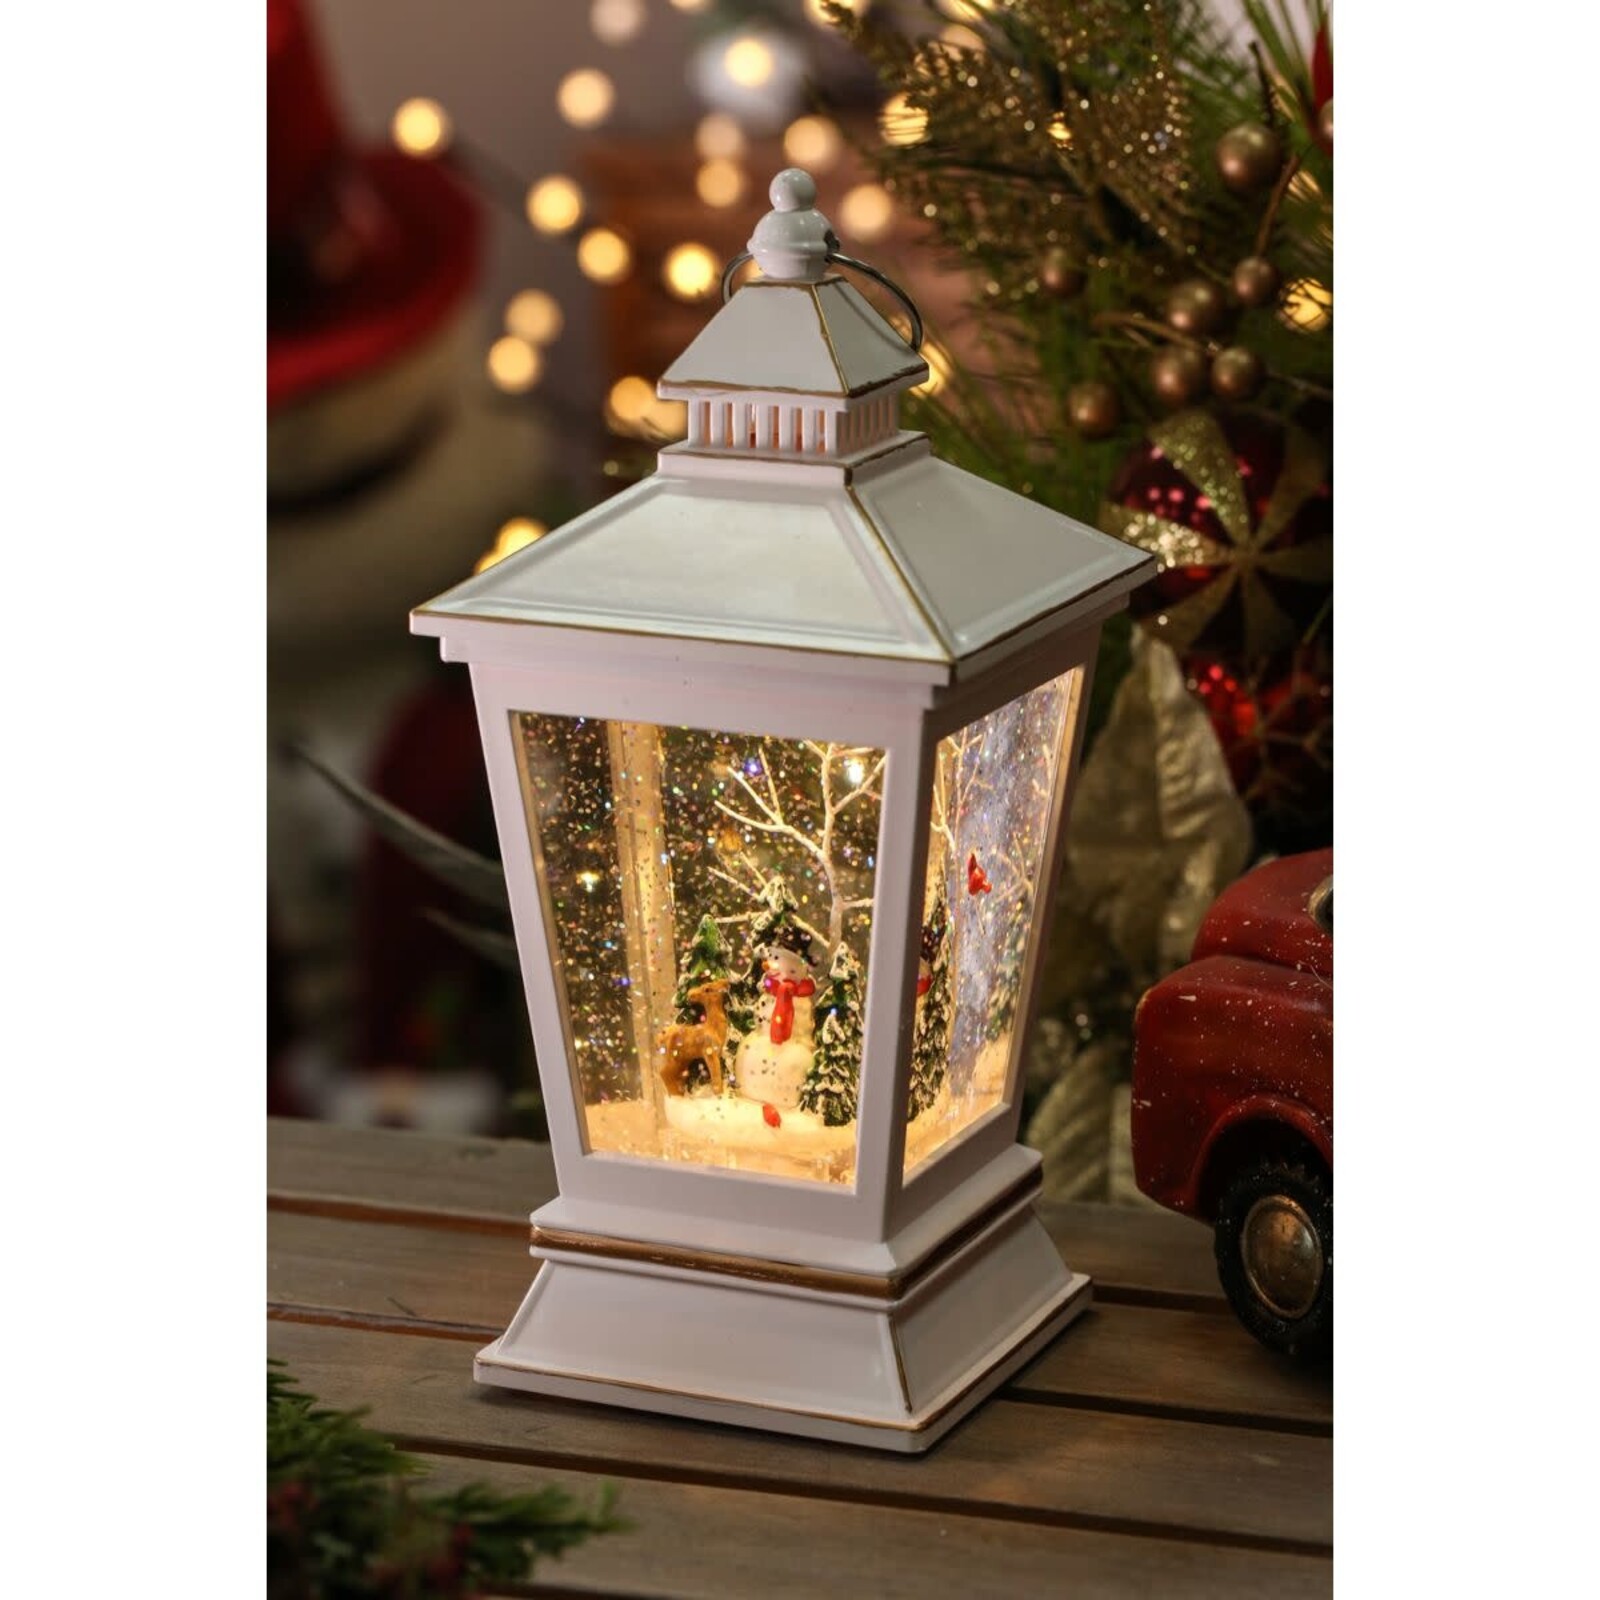 Evergreen Enterprises LED Musical White Water Lantern with Holiday Scene 8LED650 loading=